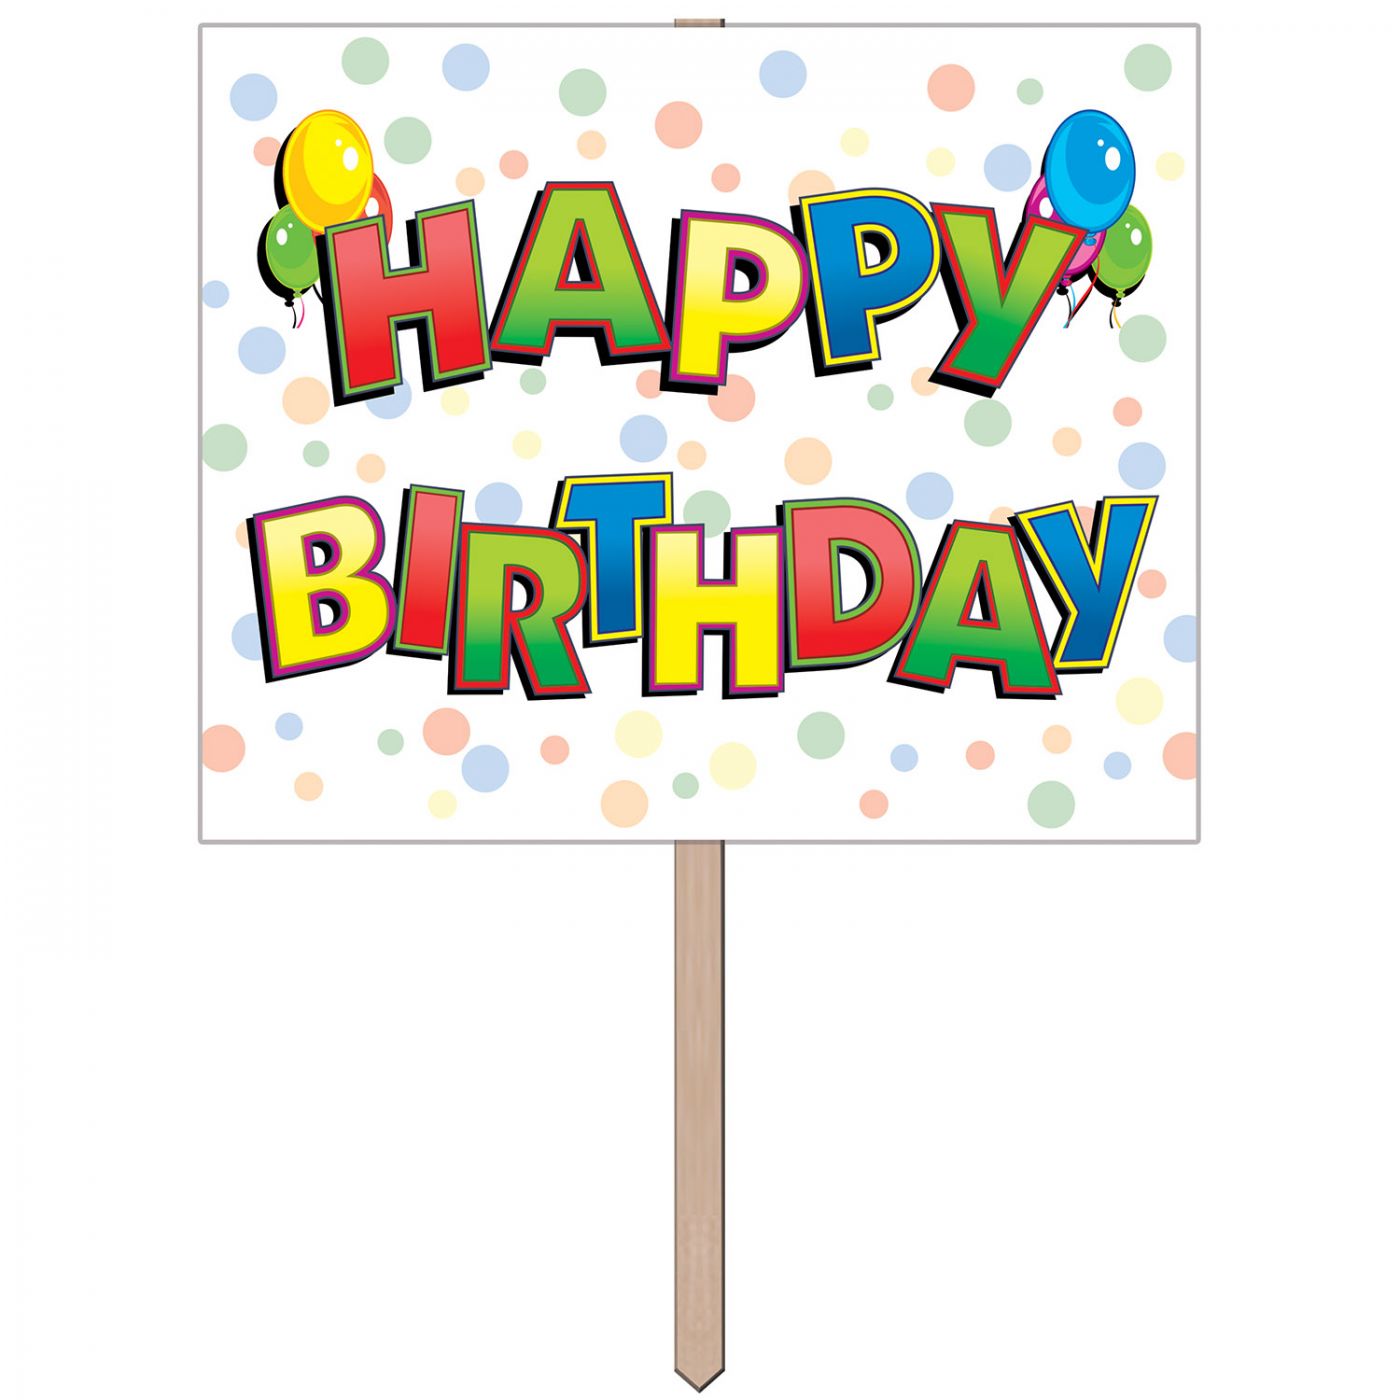 Happy Birthday Yard Sign image